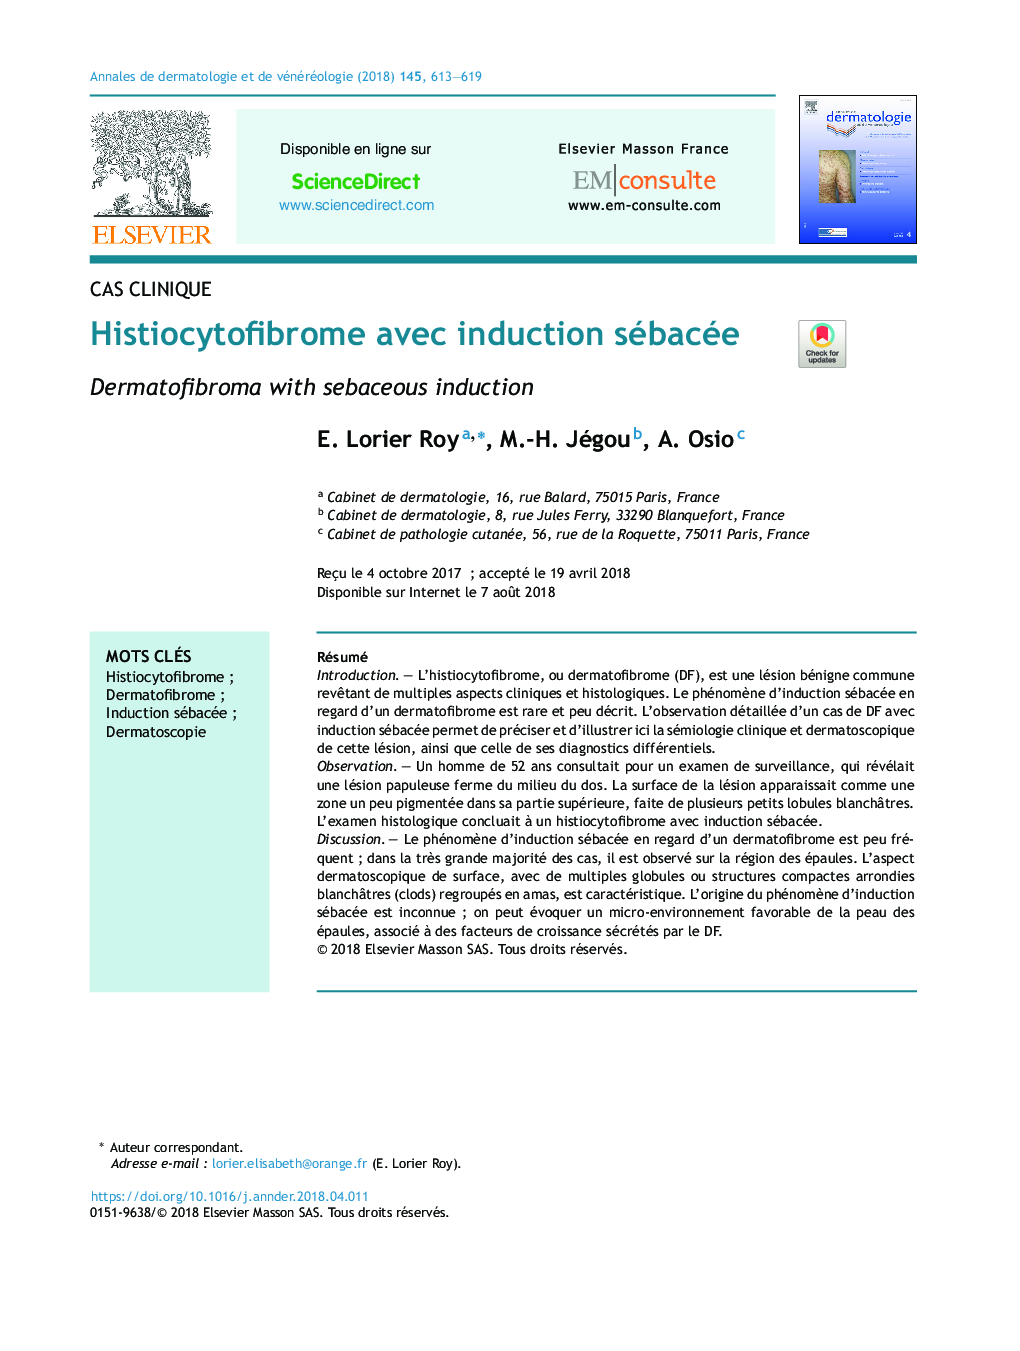 Histiocytofibrome avec induction sébacée